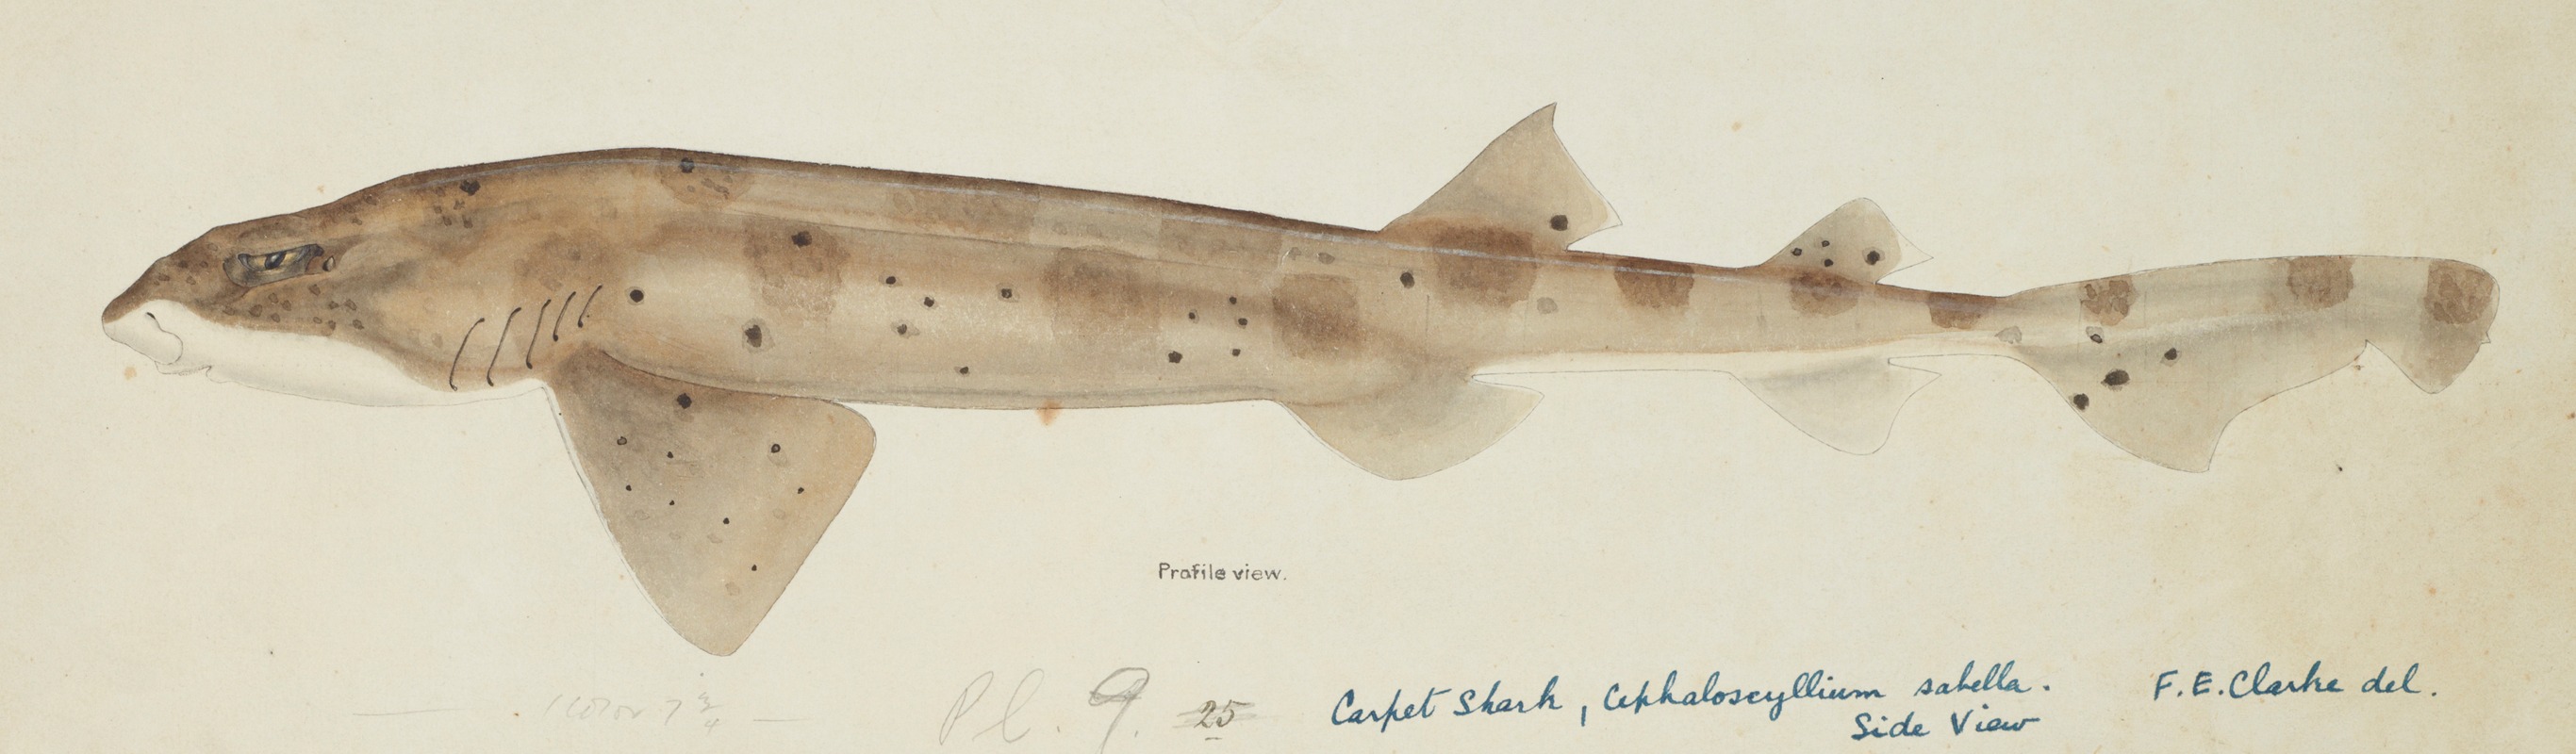 Frank Edward Clarke - Cephaloscyllium isabella (NZ) : Carpet shark